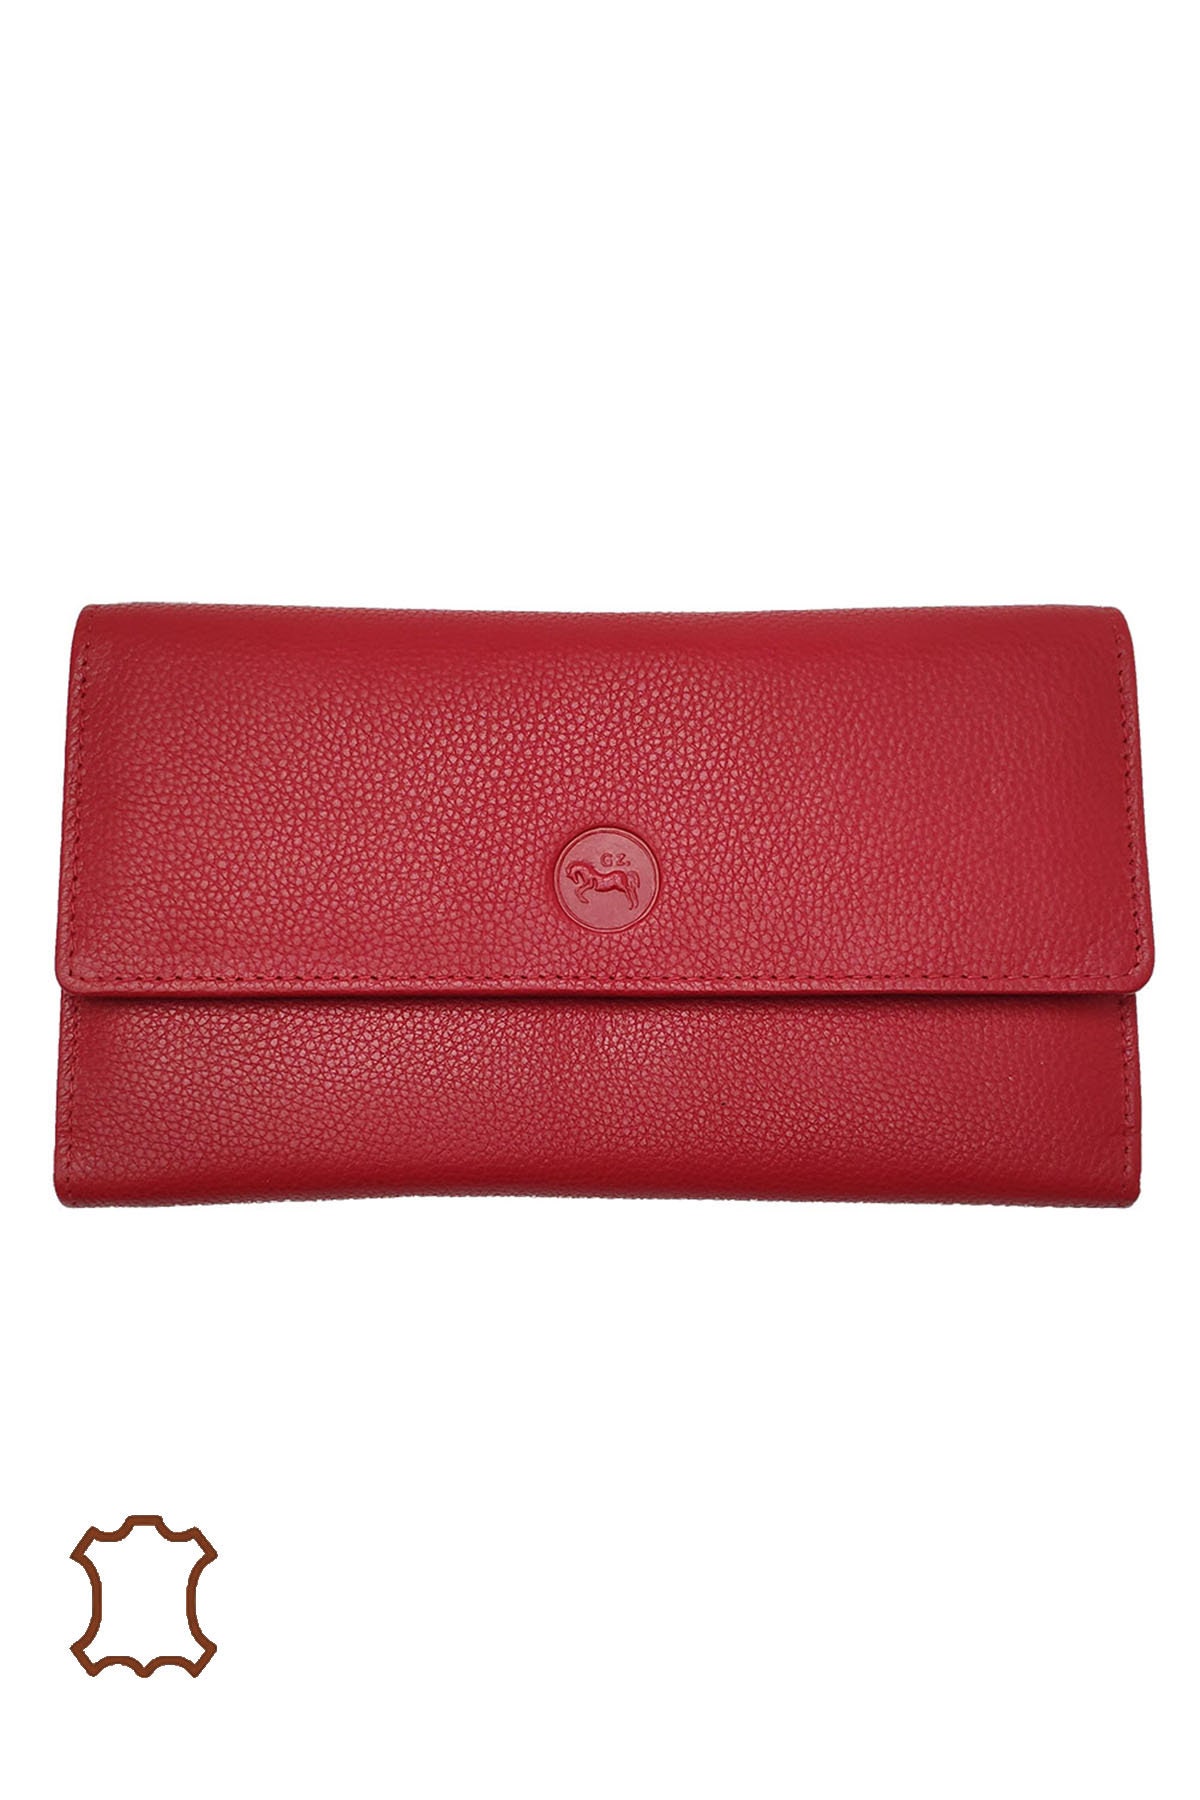 Malette leather handbag Hermès Red in Leather - 18283853